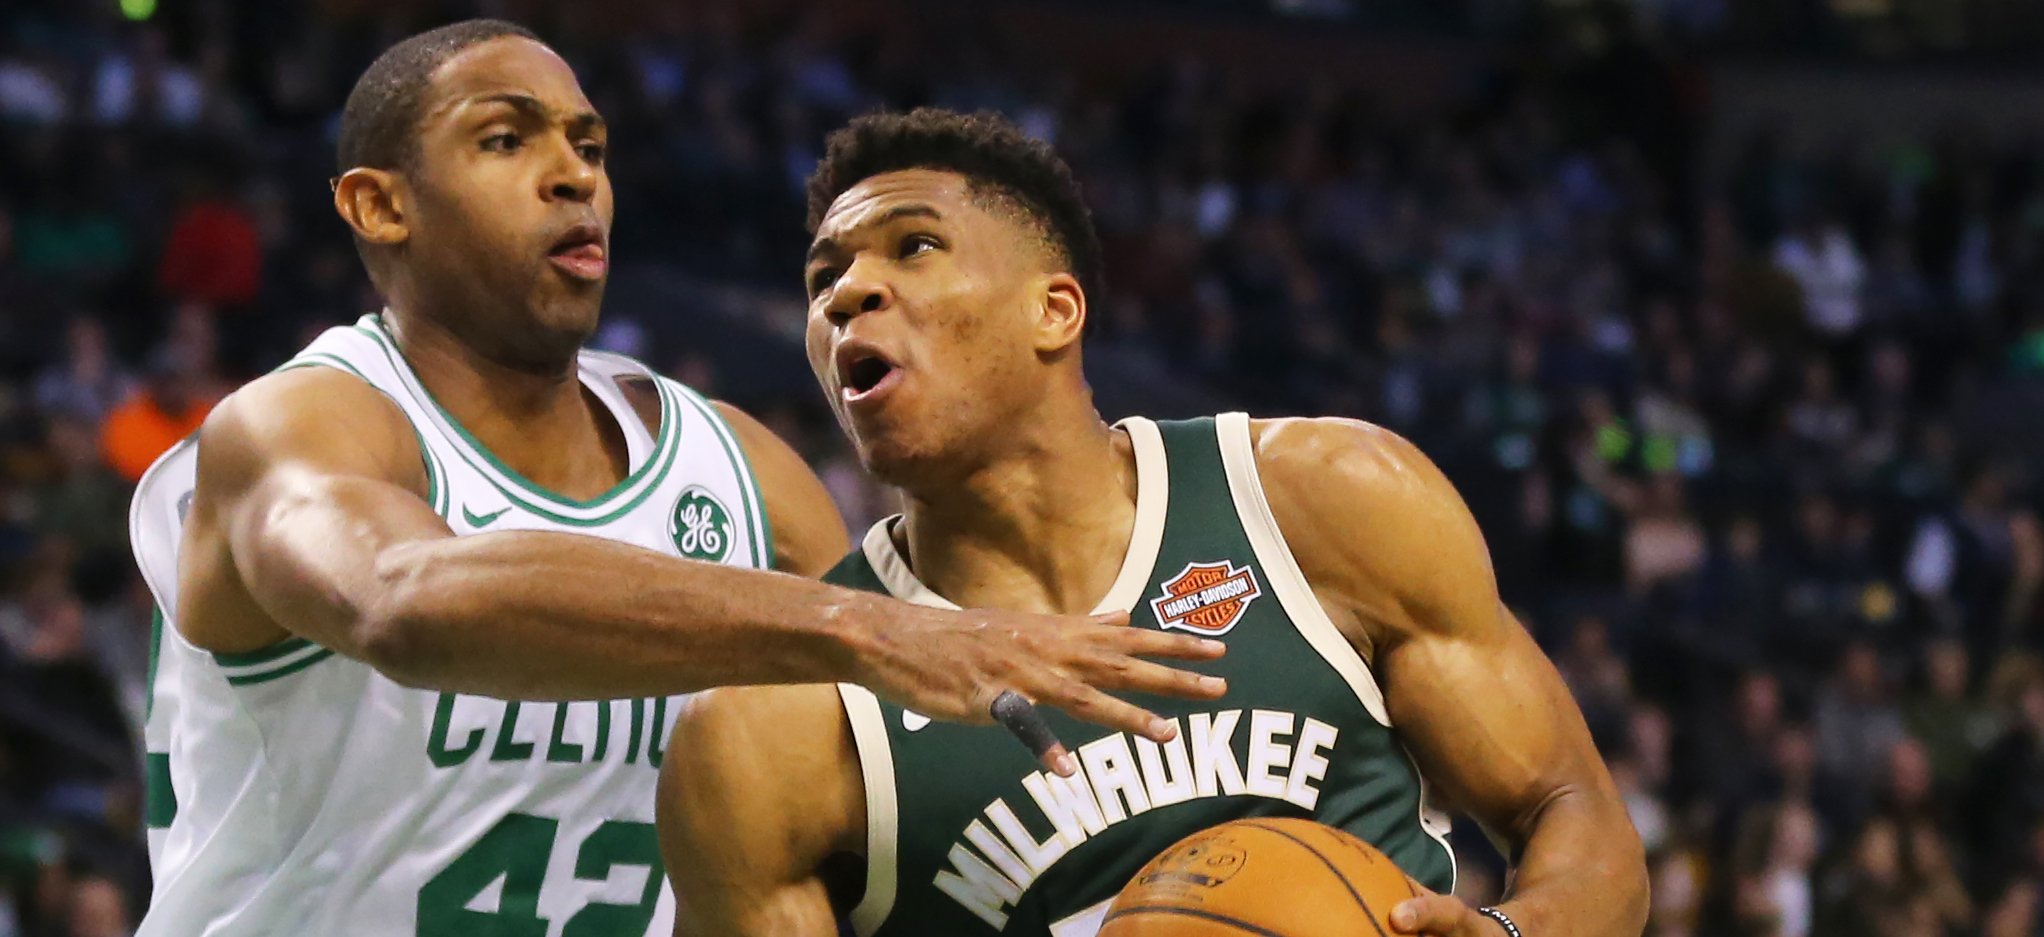 (Video) ΝΒΑ Playoffs: Απλά ασταμάτητος ο Γιάννης, διέλυσε τους Celtics με 39 πόντους και 16 ριμπάουντ